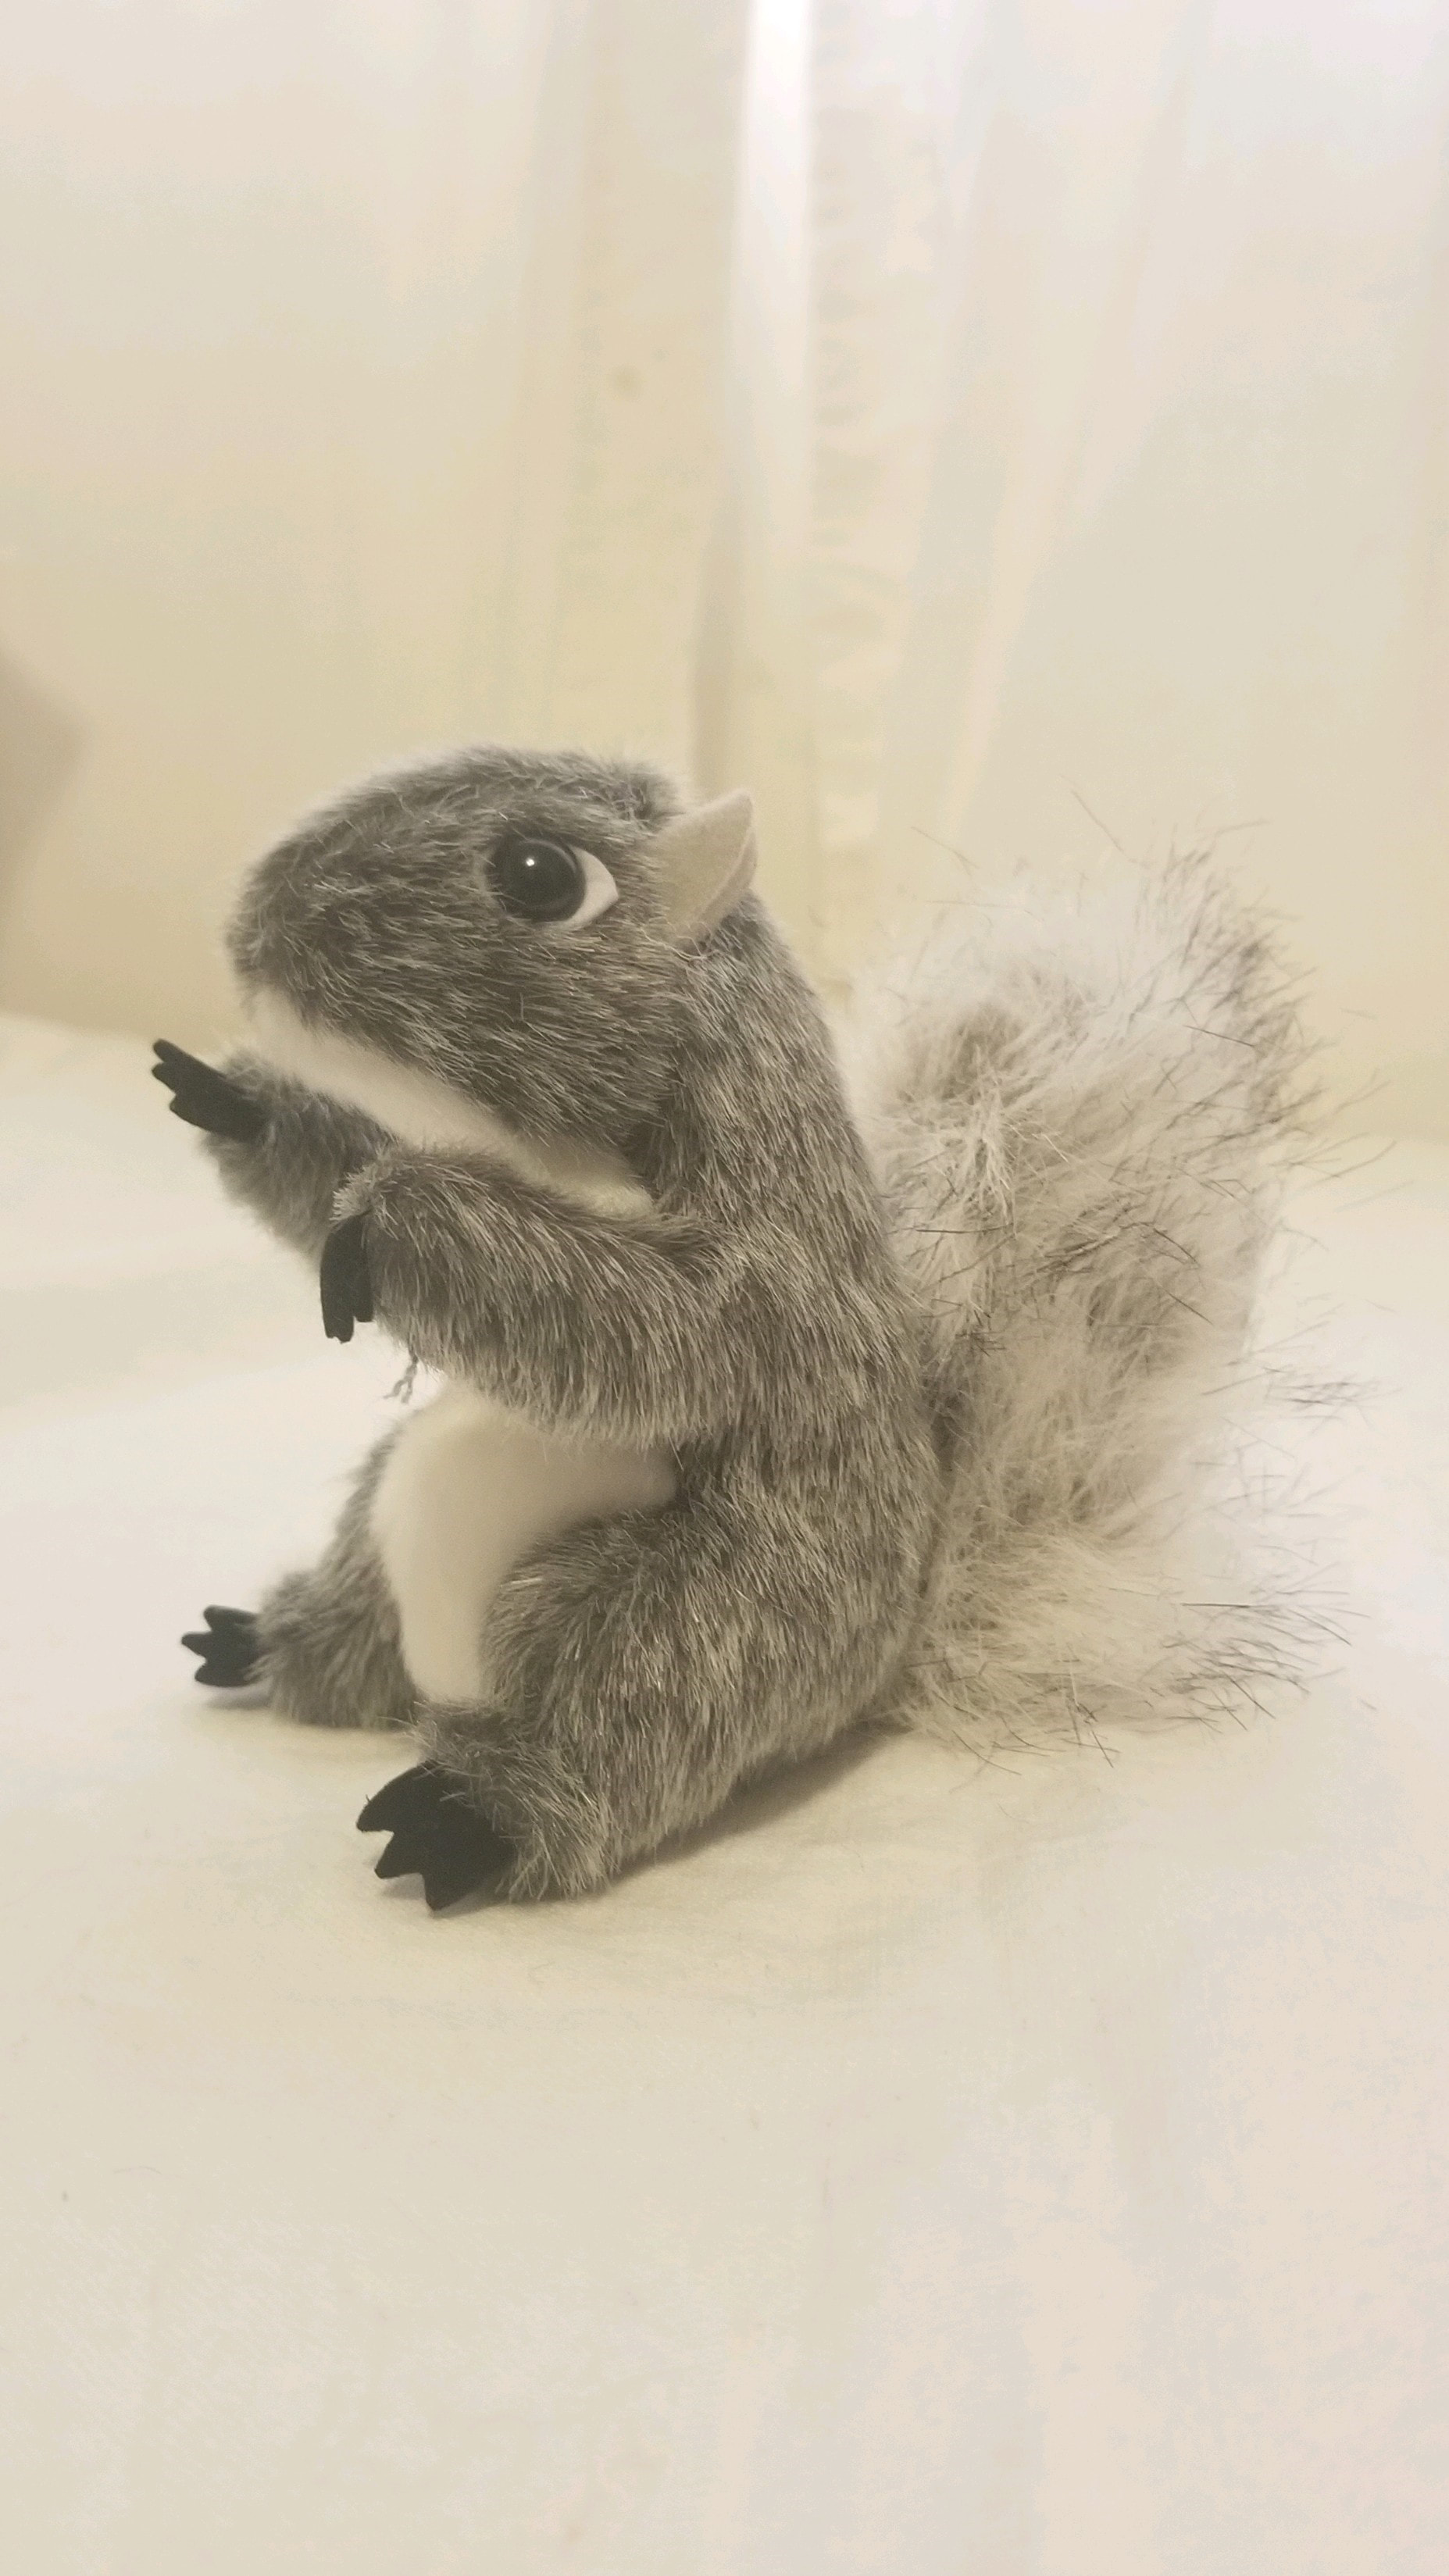 Folkmanis Mini Gray Squirrel Finger Puppet